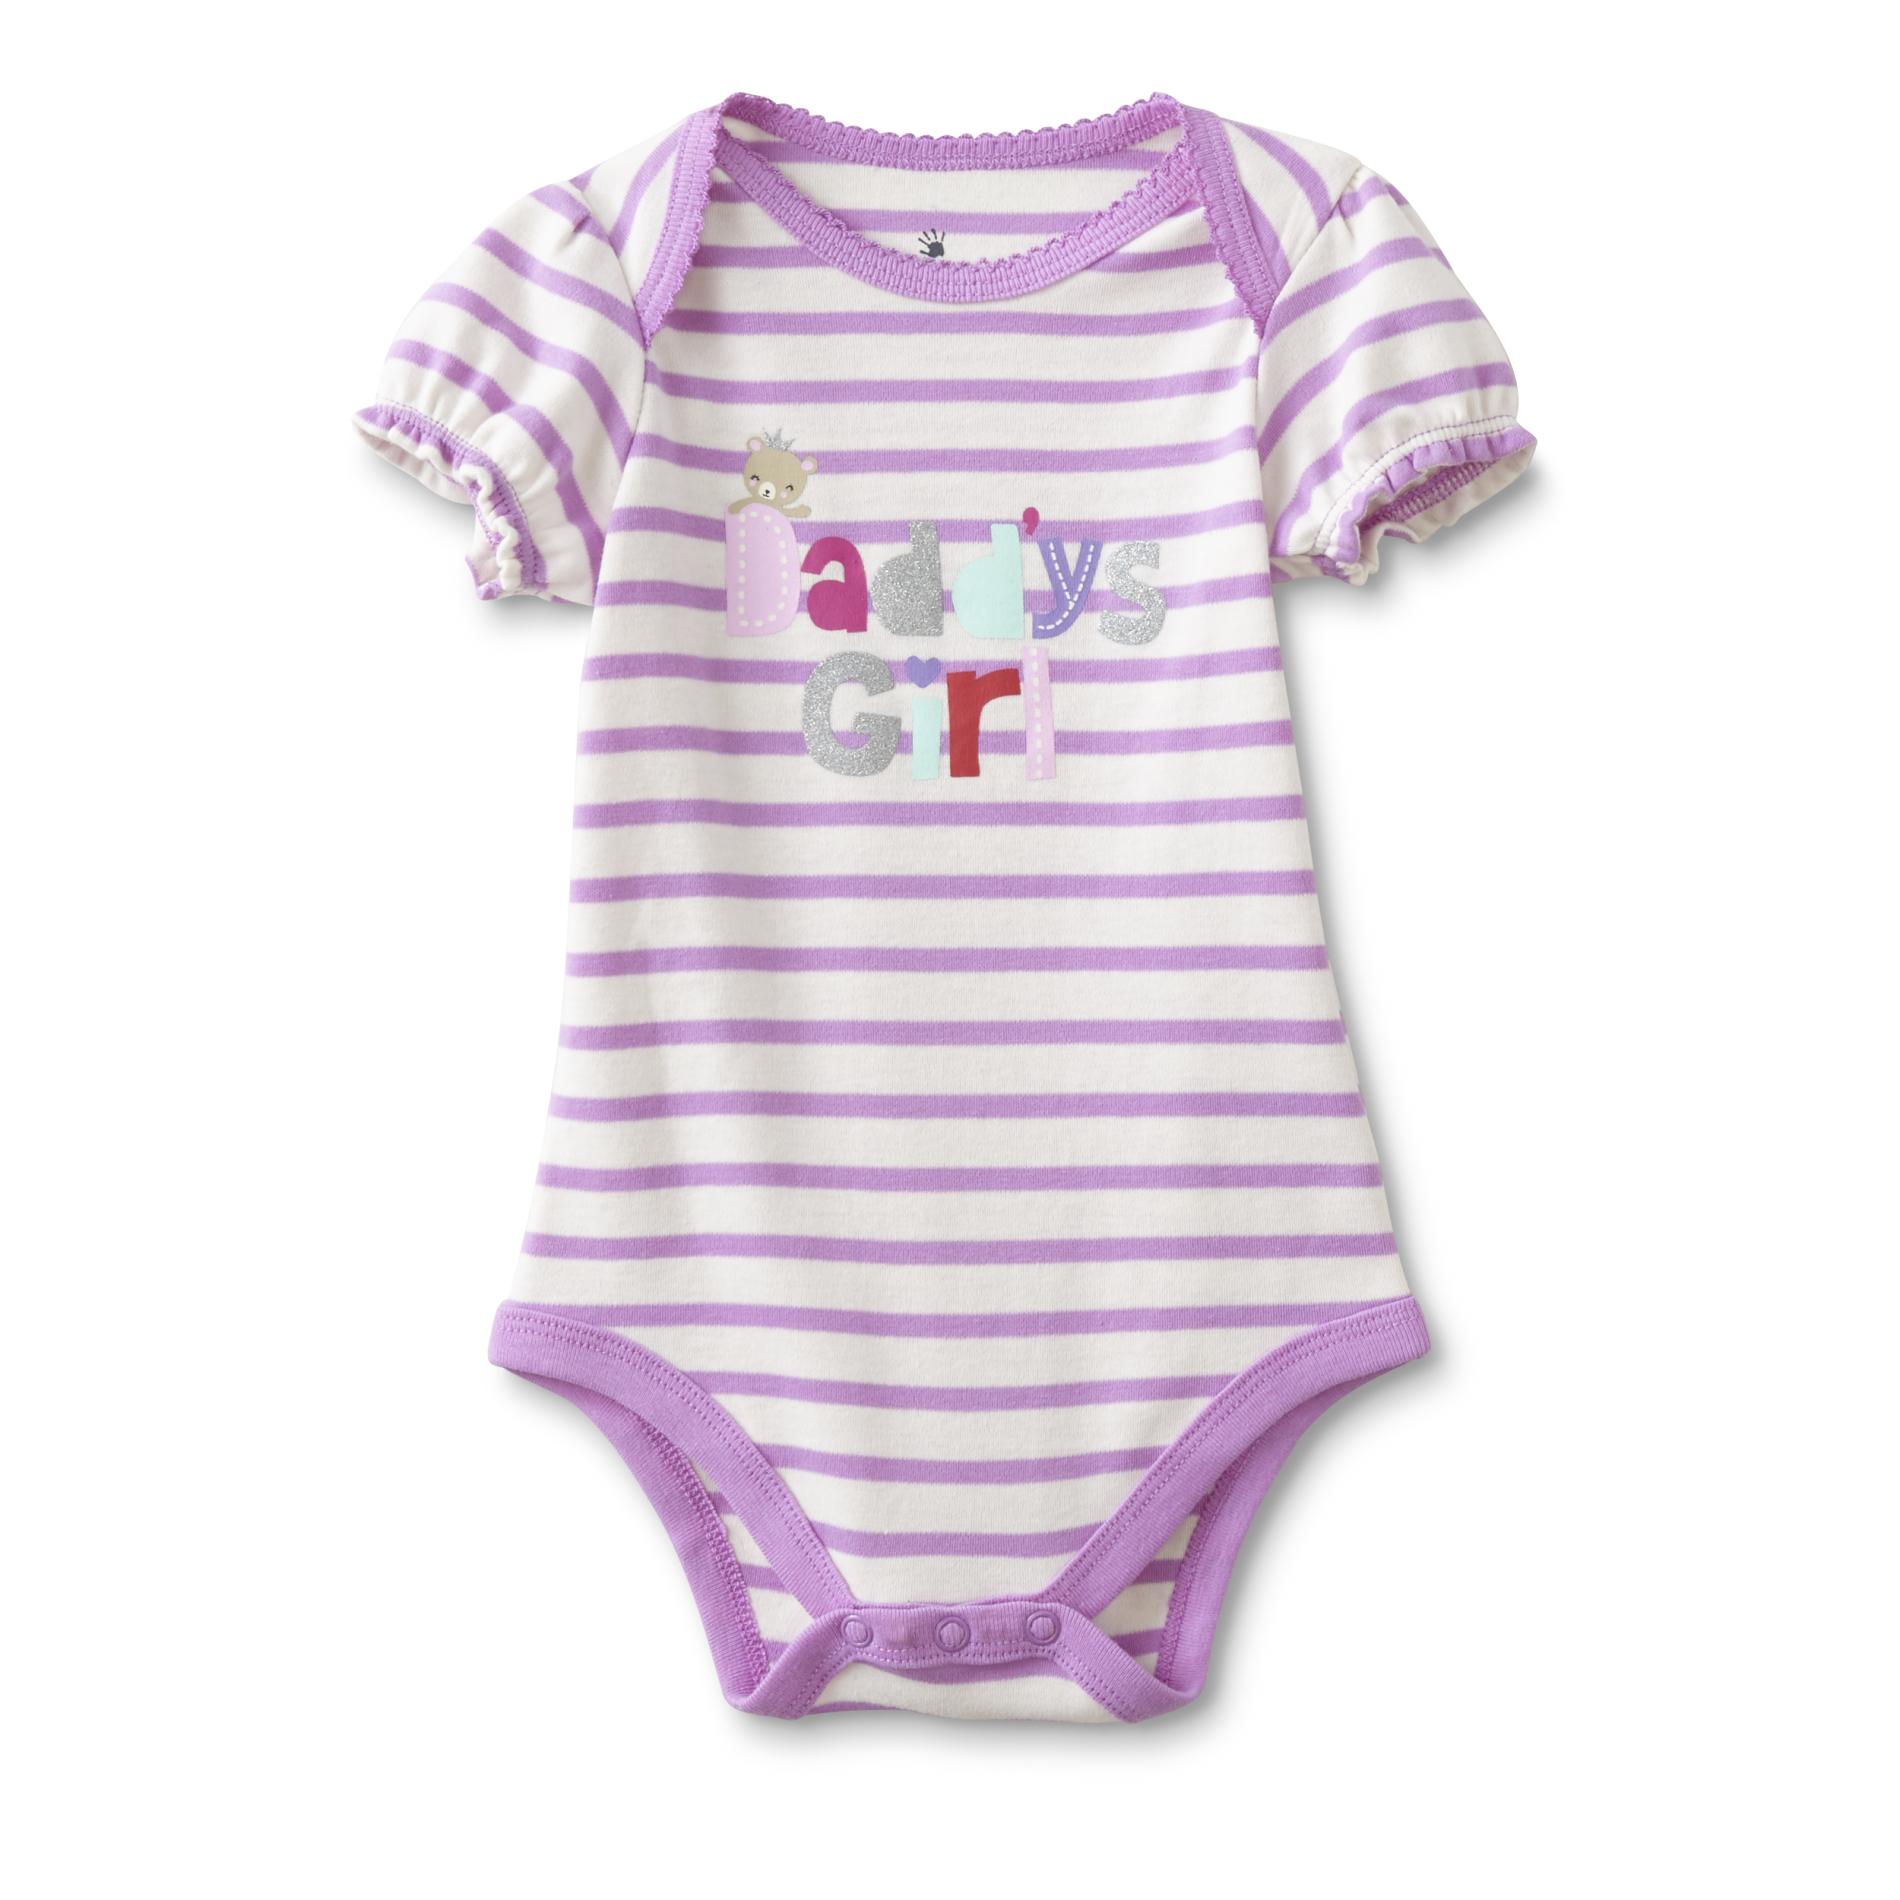 Small Wonders Newborn & Infant Girls' Graphic Bodysuit - Daddy's Girl